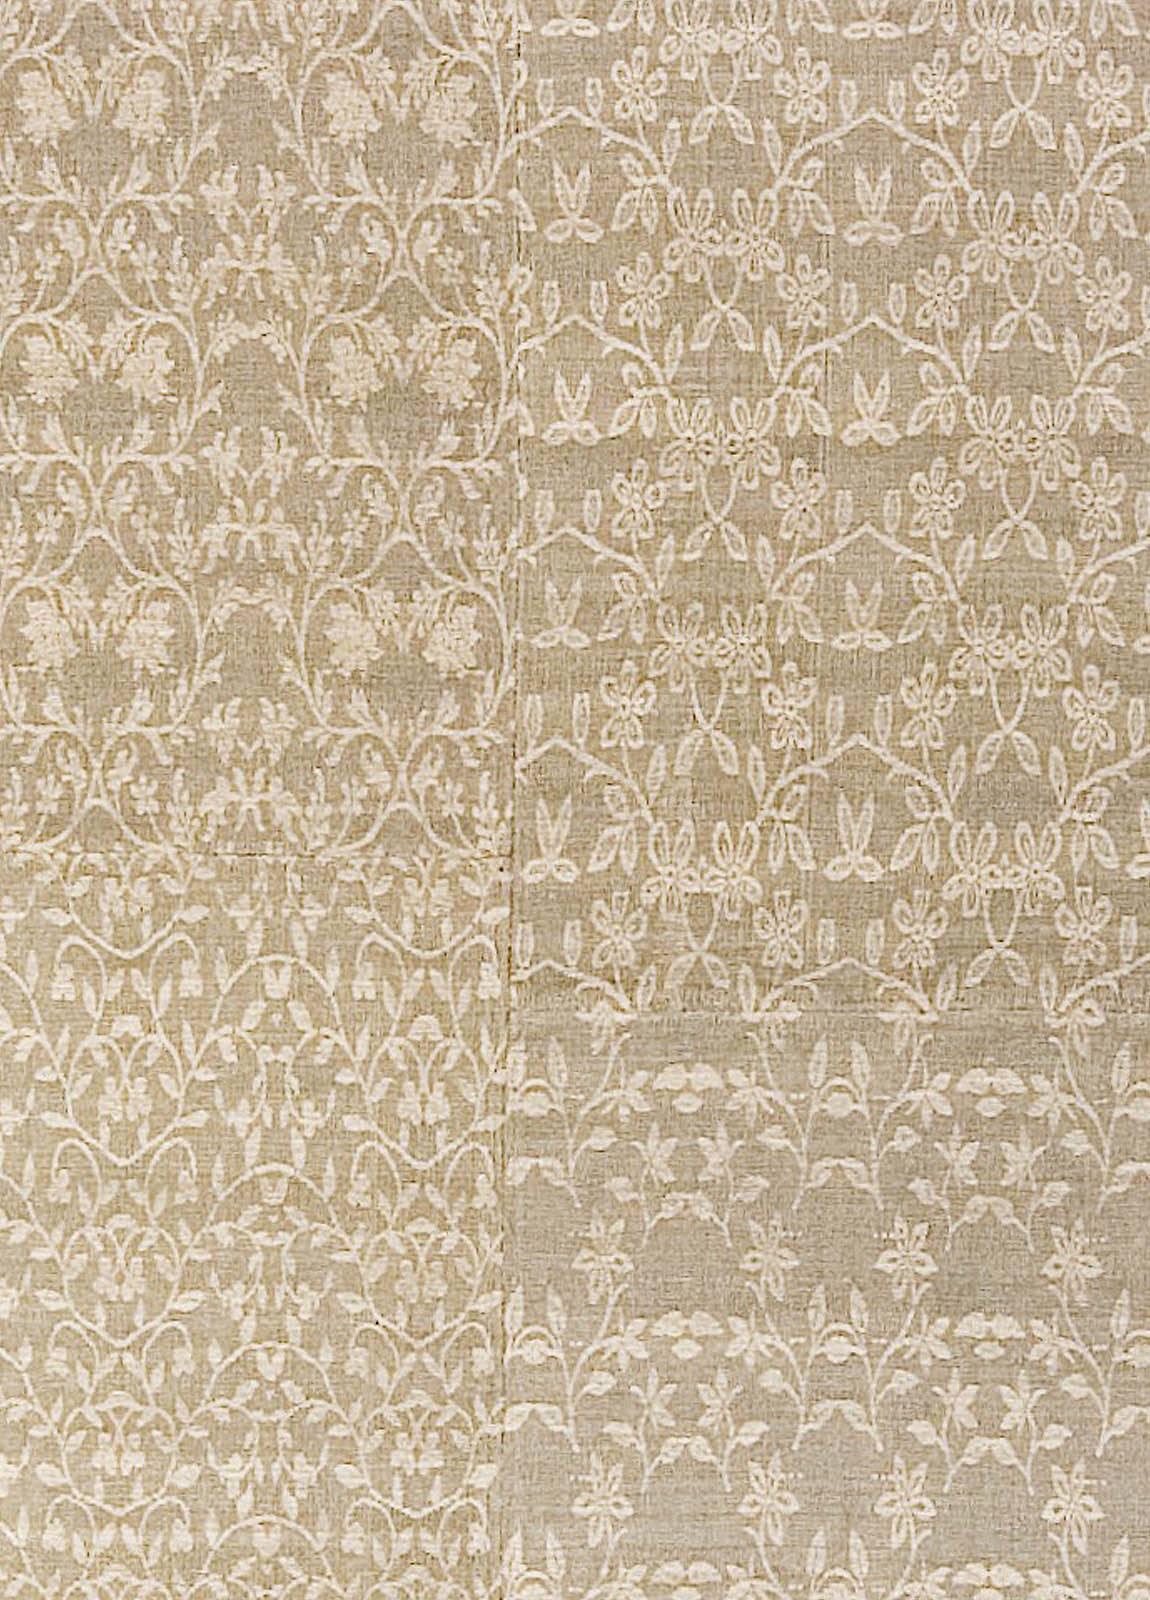 Contemporary patchwork-like MM floral handmade wool rug by Doris Leslie Blau.
Size: 8'0